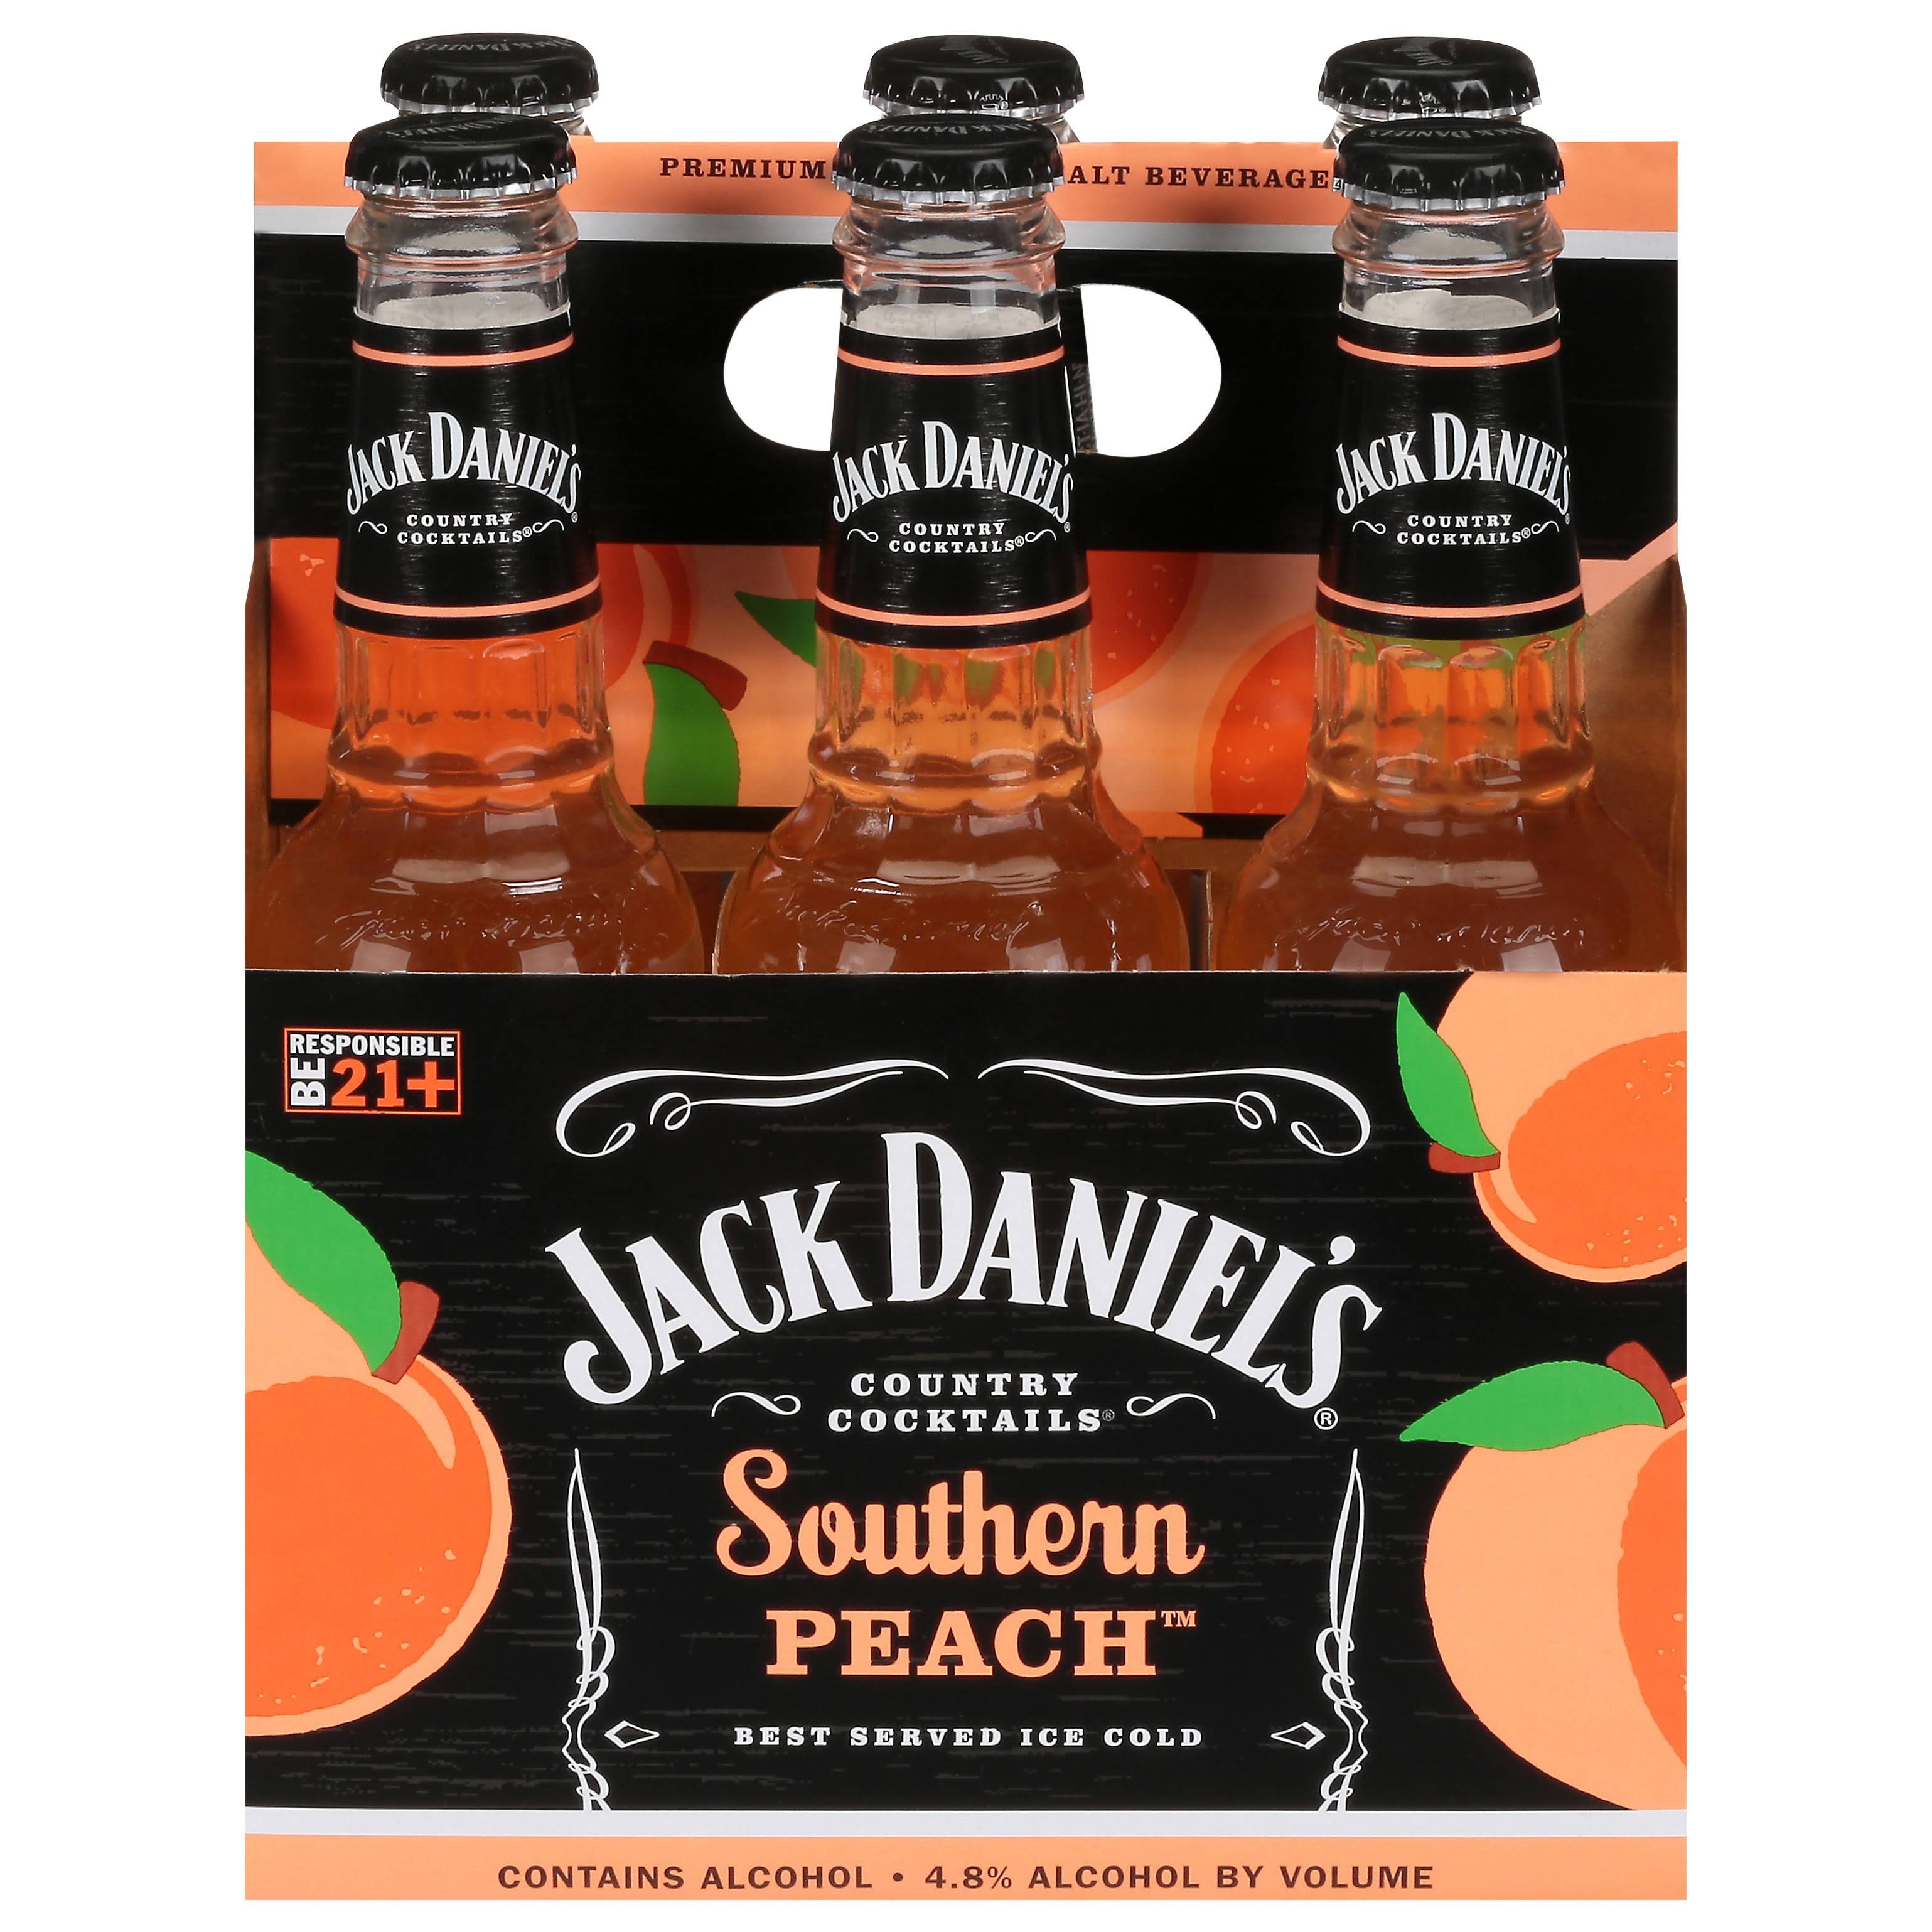 Jack Daniel's Country Cocktails Southern Peach Malt Beverage - 10oz, x6